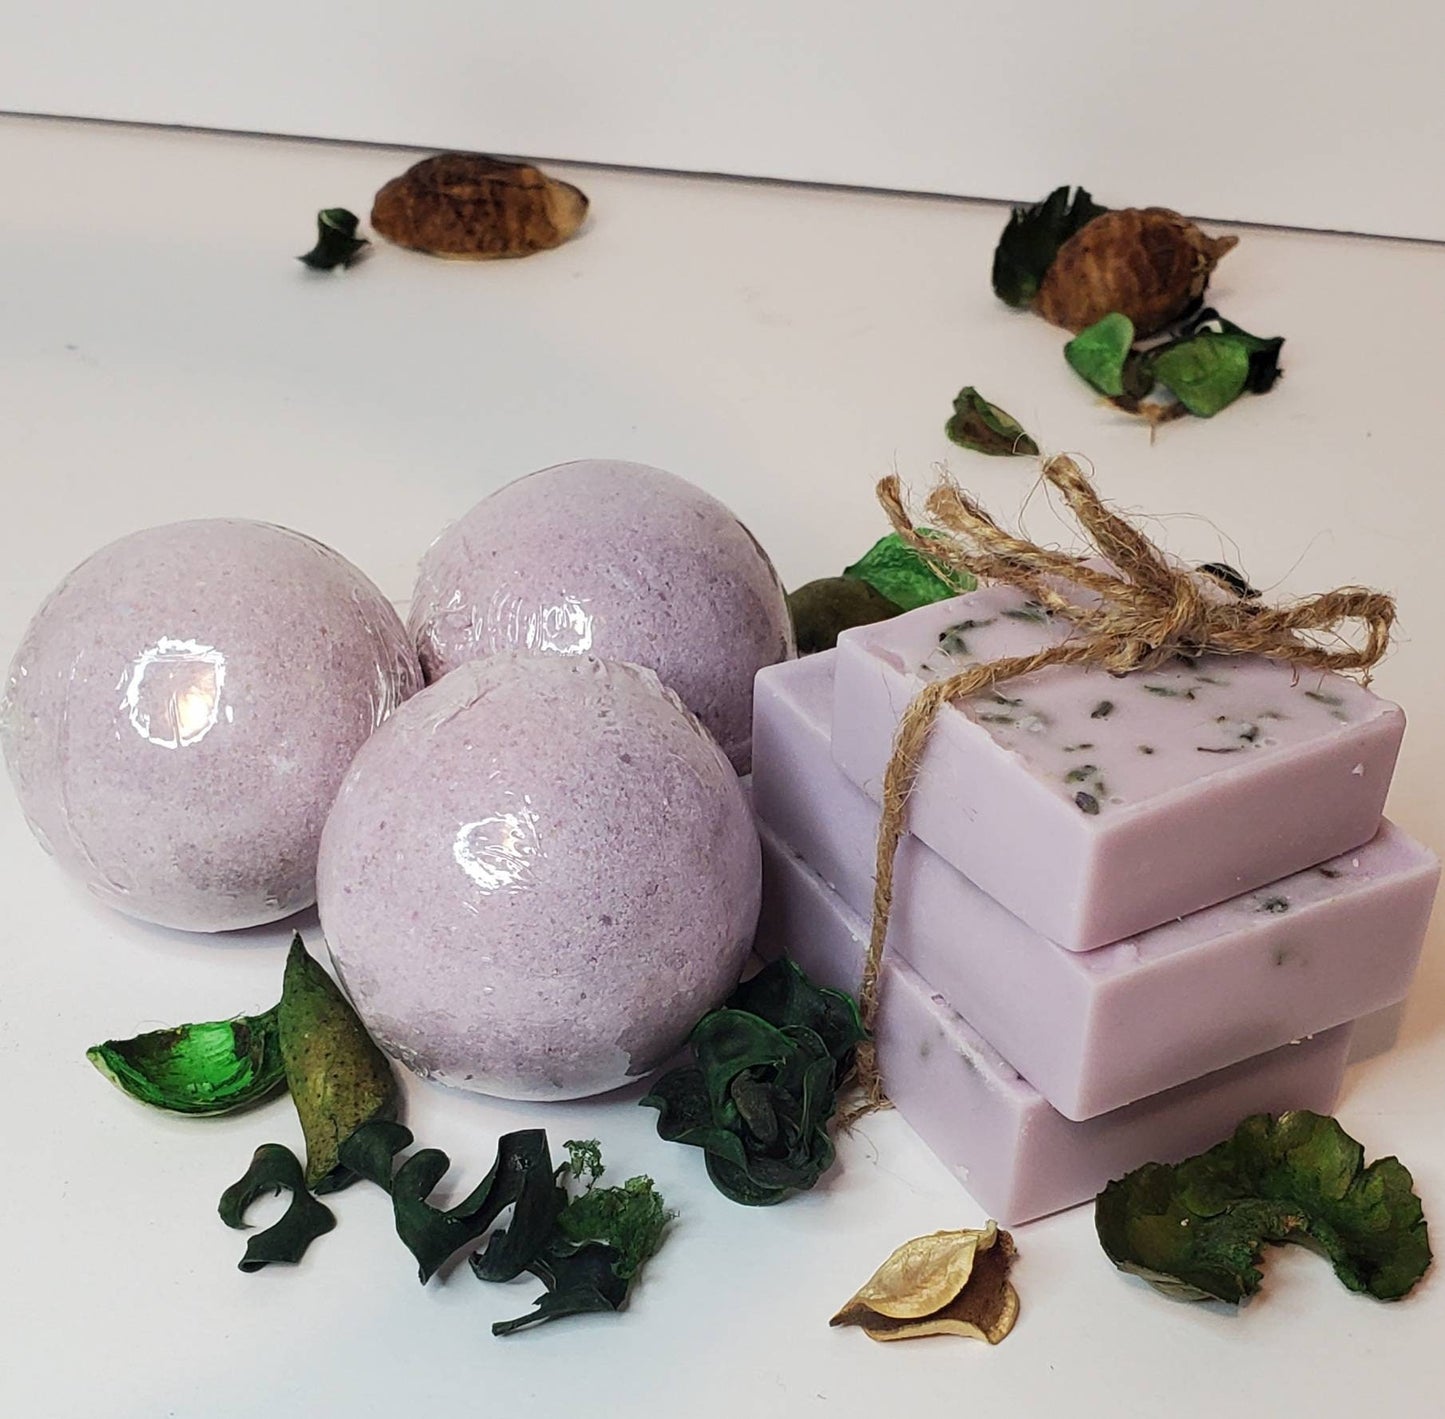 Lavender Bath Spa Set|Body Butta|Bath Bombs|Natural Soap Bars